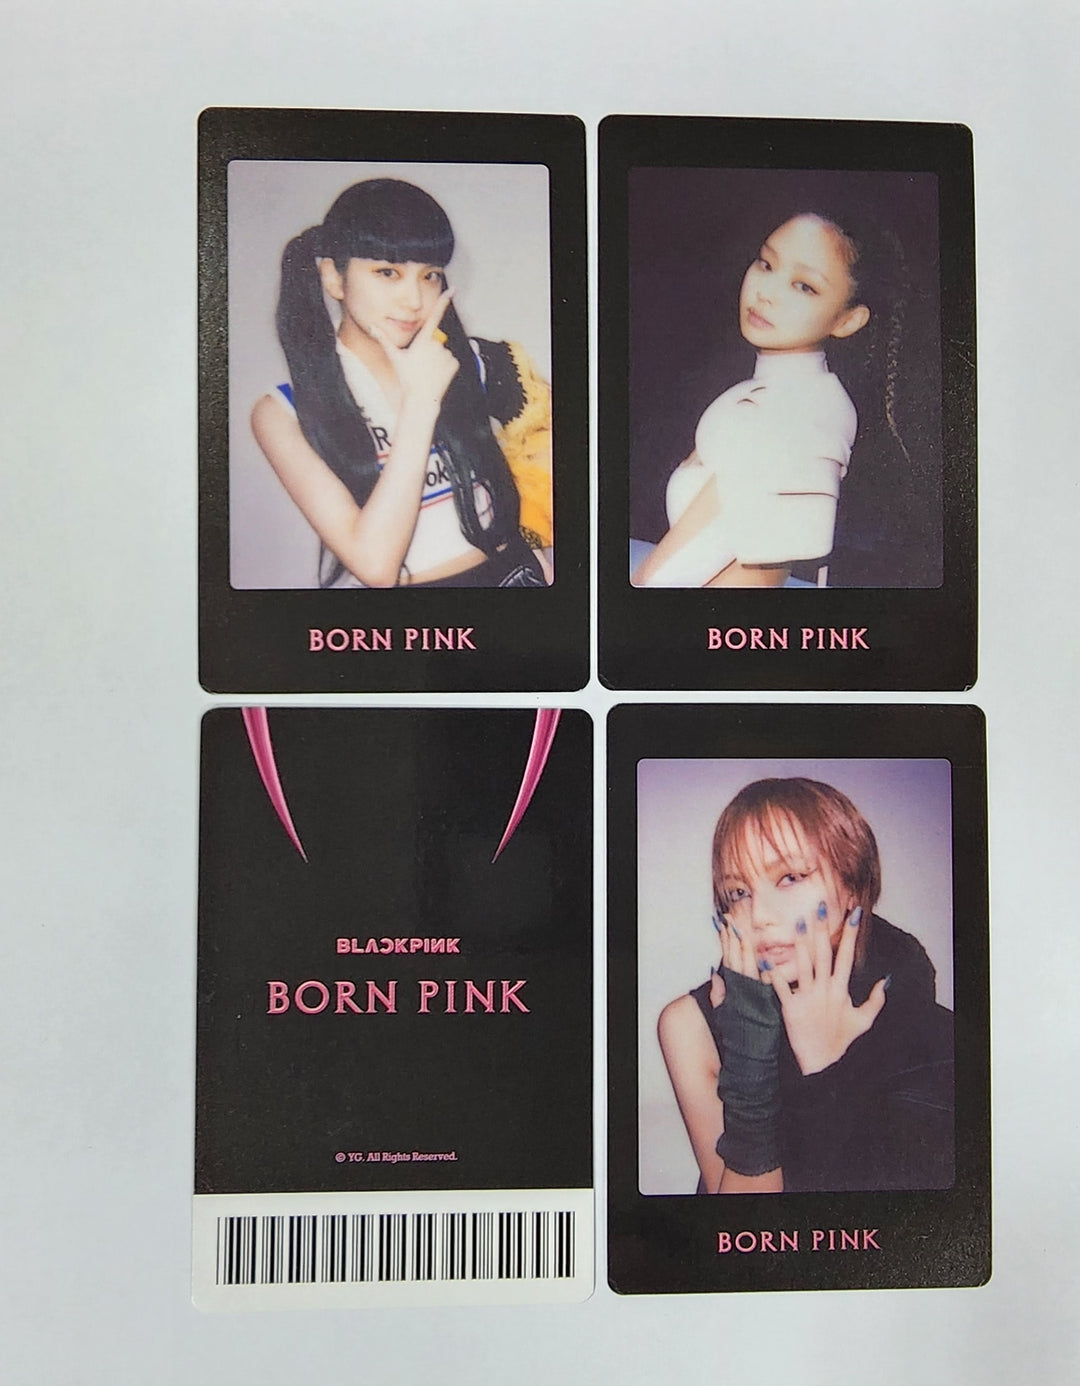 BLACK PINK "Born Pink" - Pop-Up Store Offline Event Photocard [Updated 9/28]